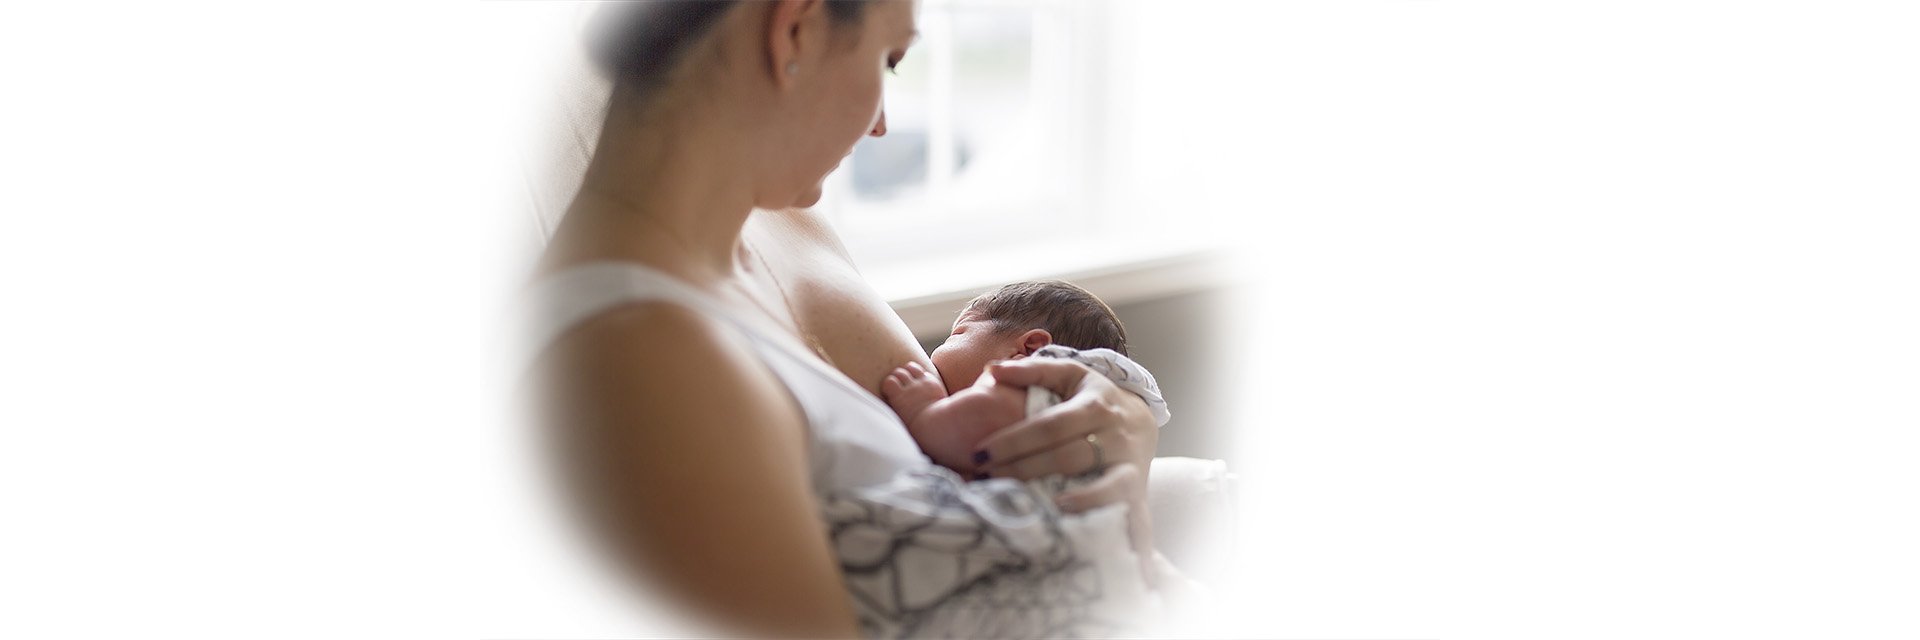 https://www.texashealth.org/baby-care/-/media/Project/THR/Sub-Sites/THR-Baby-Care/Header-Images/header-mom-feeding-swaddled-infant.jpg?h=640&iar=0&w=1920&hash=12FE468986DE34EC4029E5268F246092